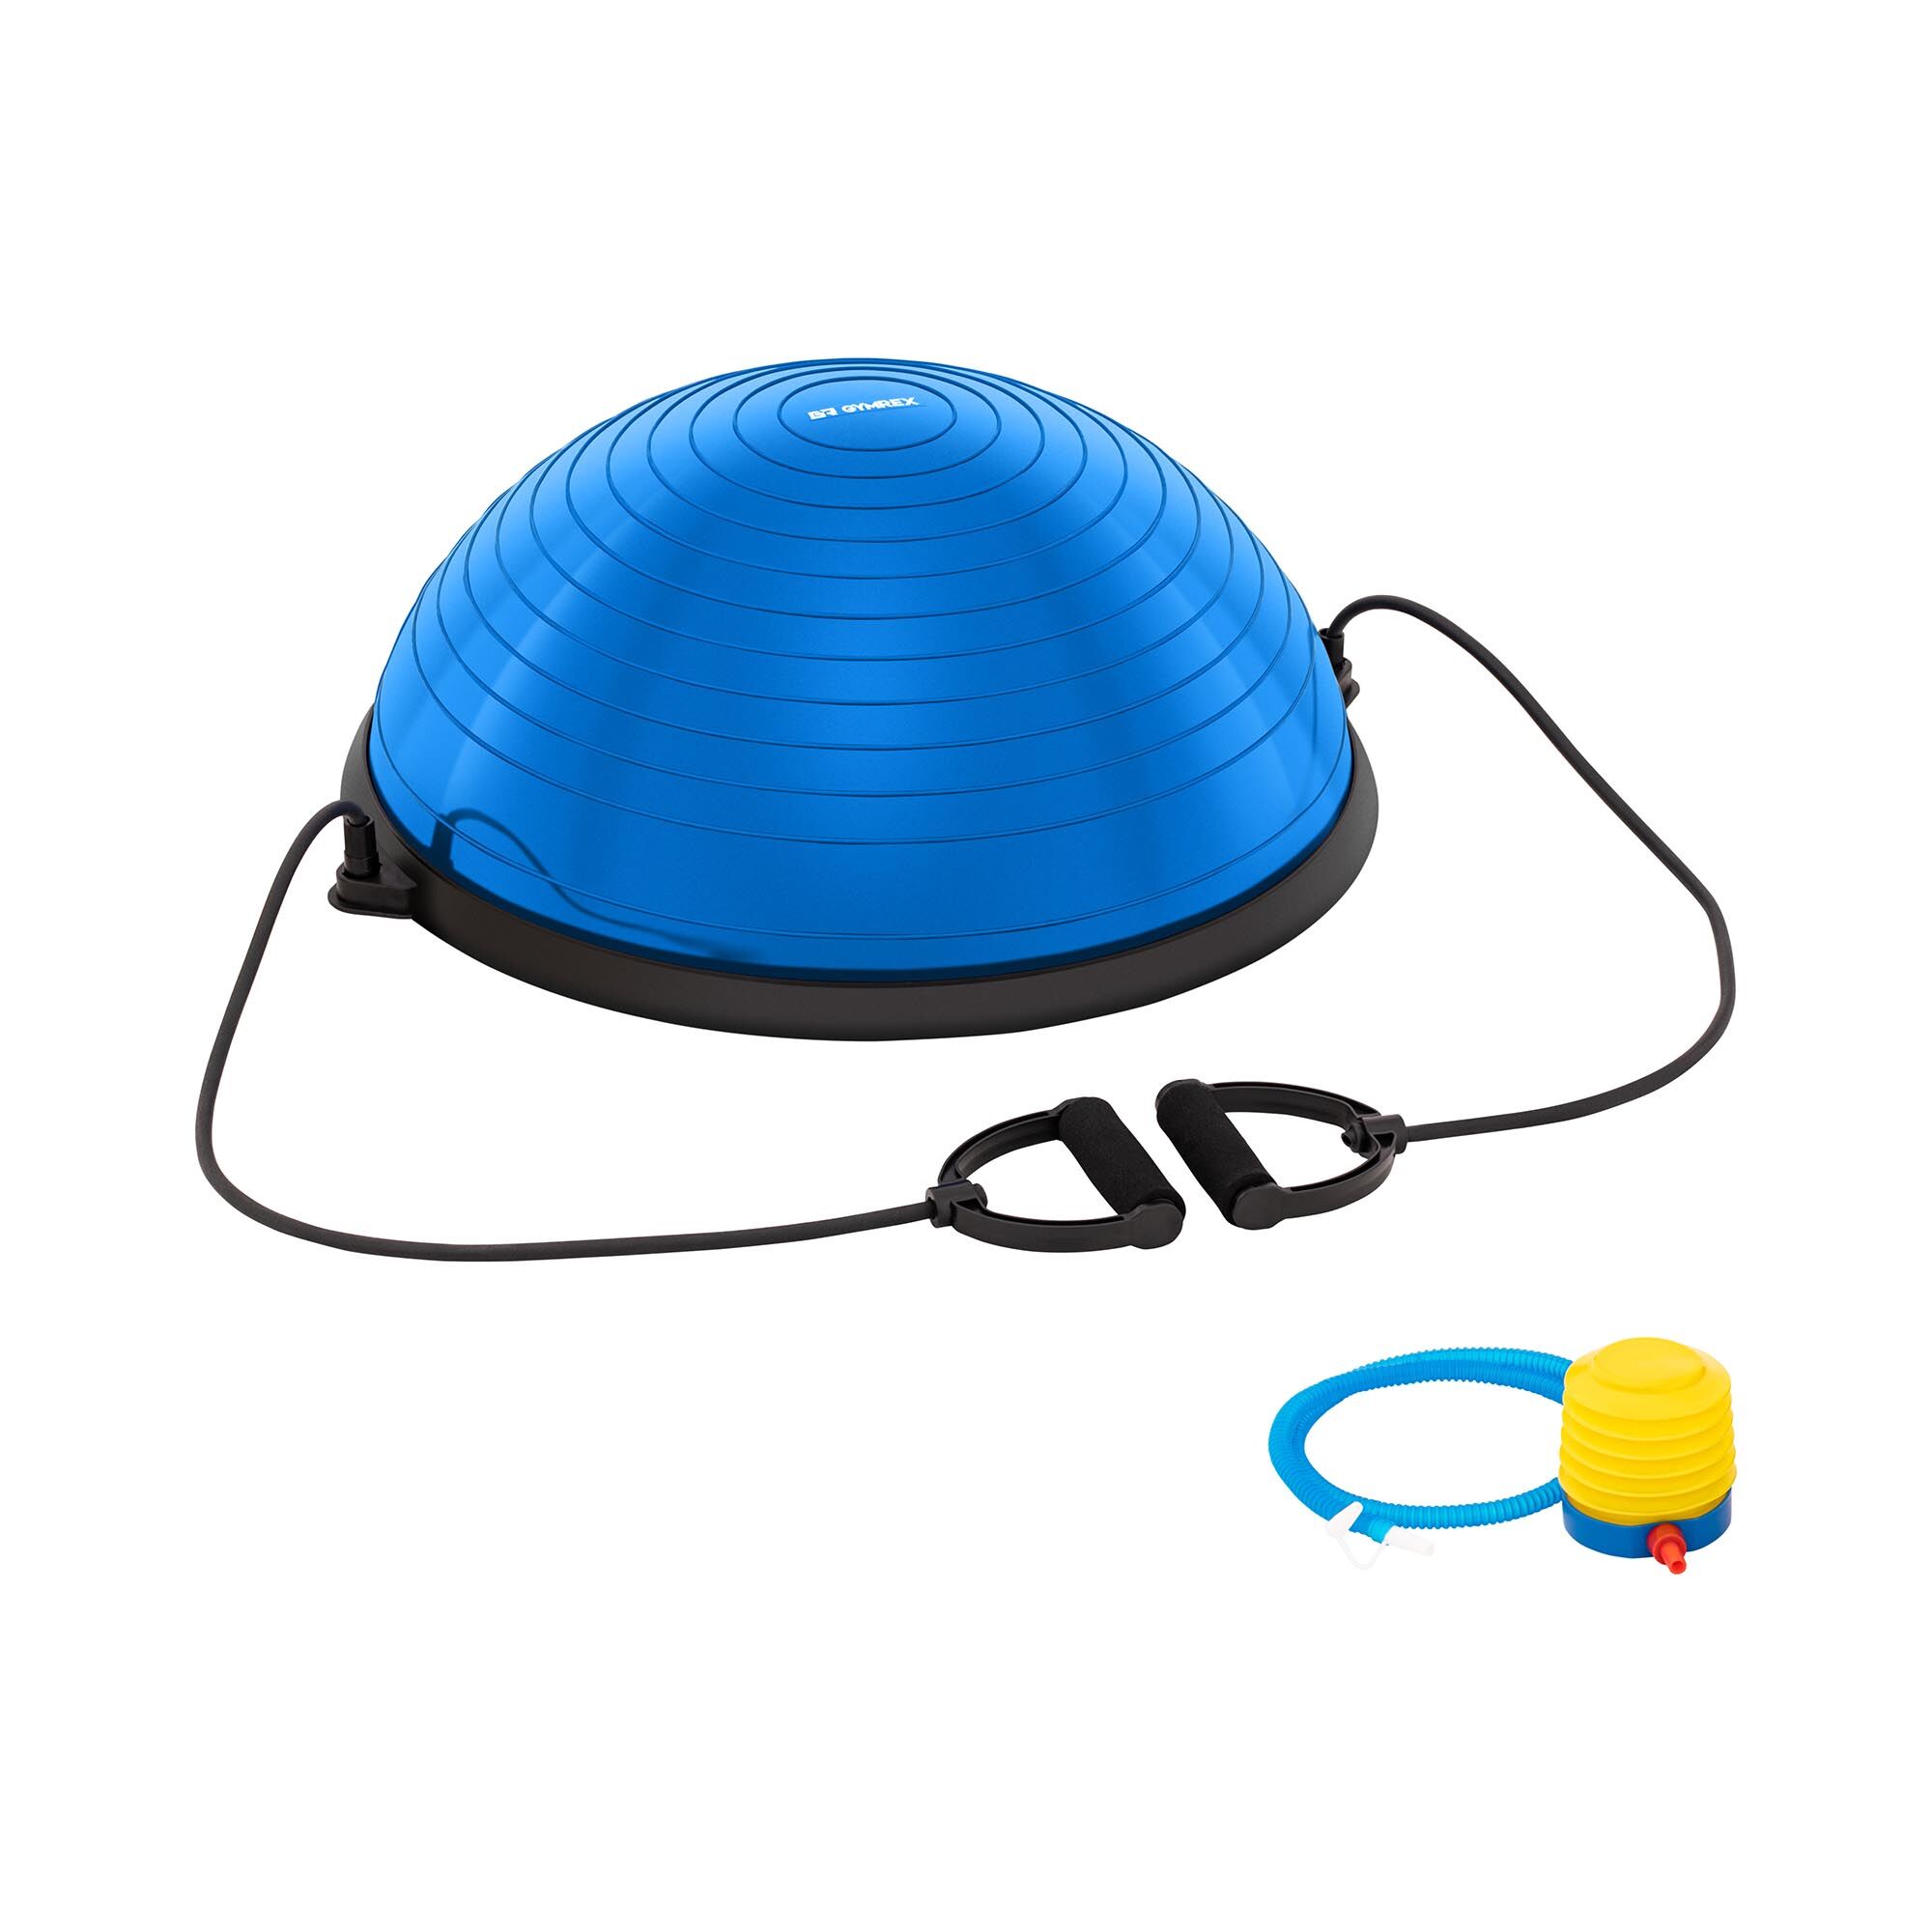 Gymrex Yoga Ball incl. Resistance Bands - 220 kg - blue